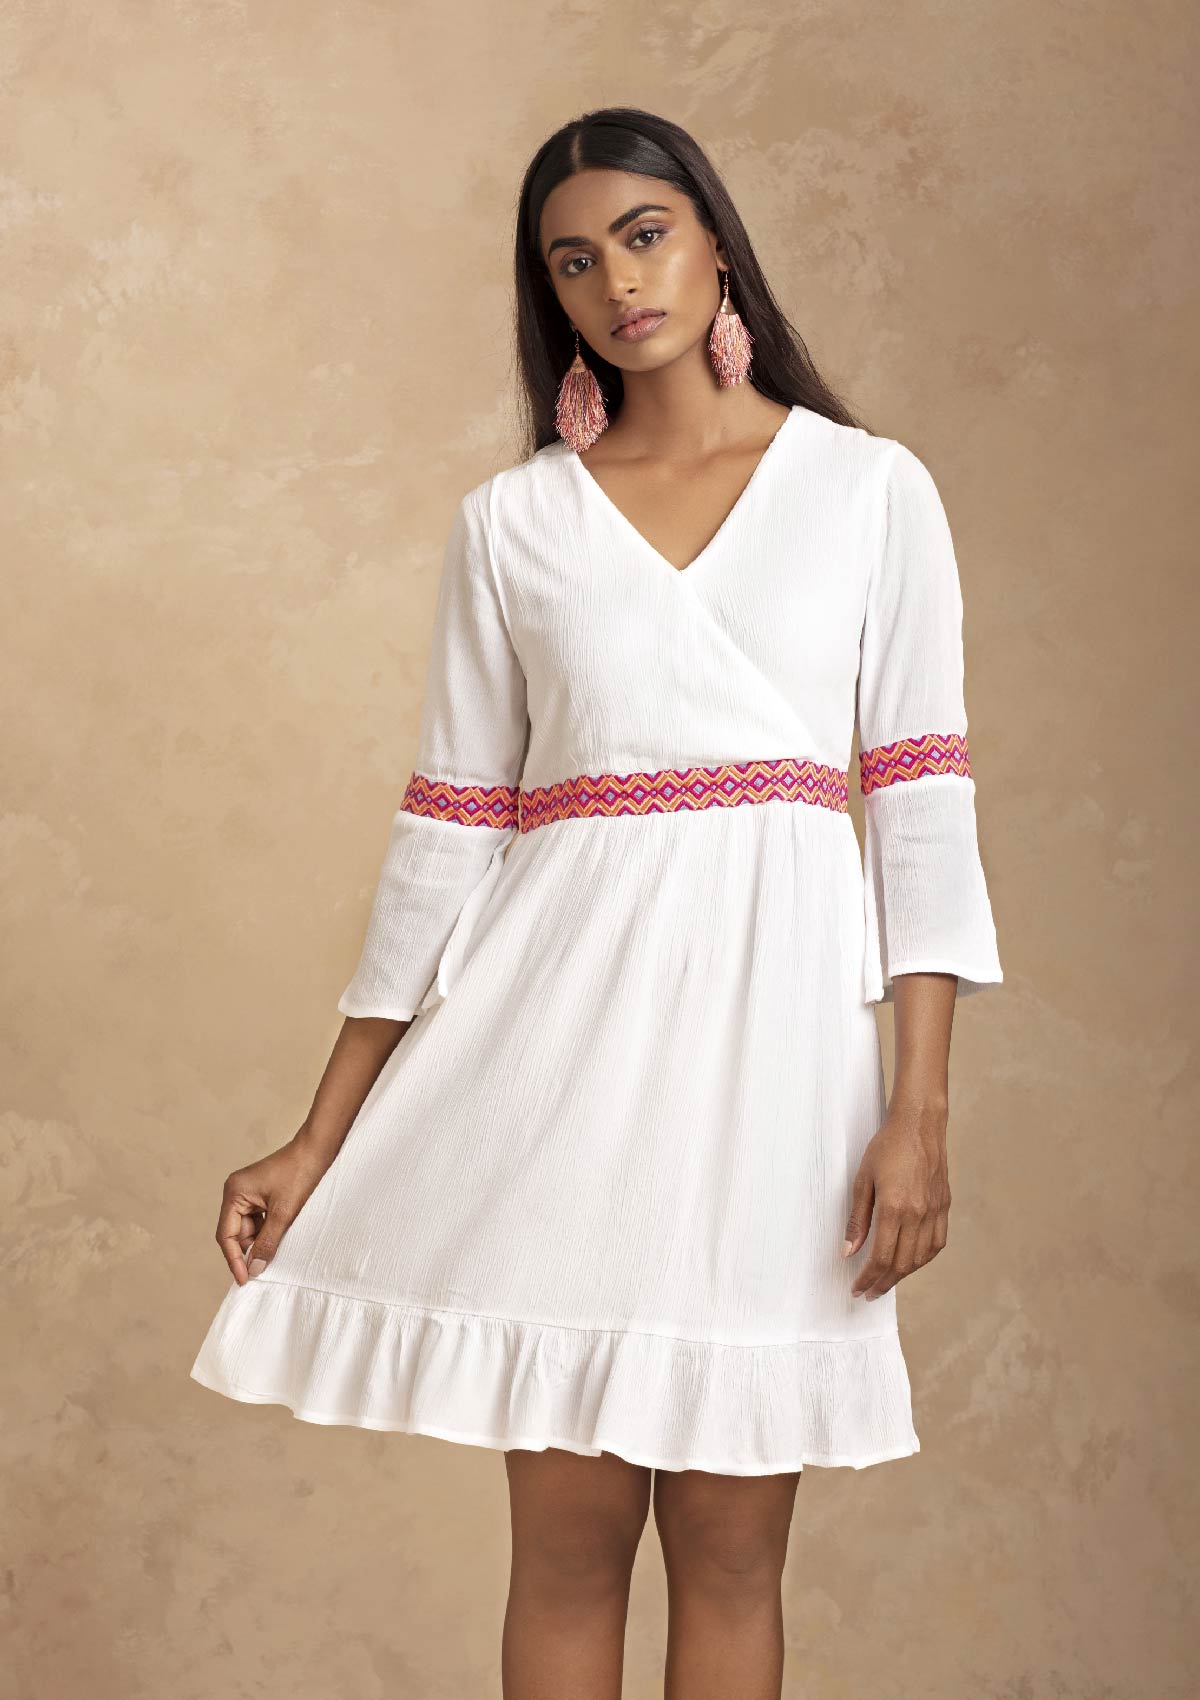 Adhara - Sassy White Dress with elegant Embroidery - IshqMe